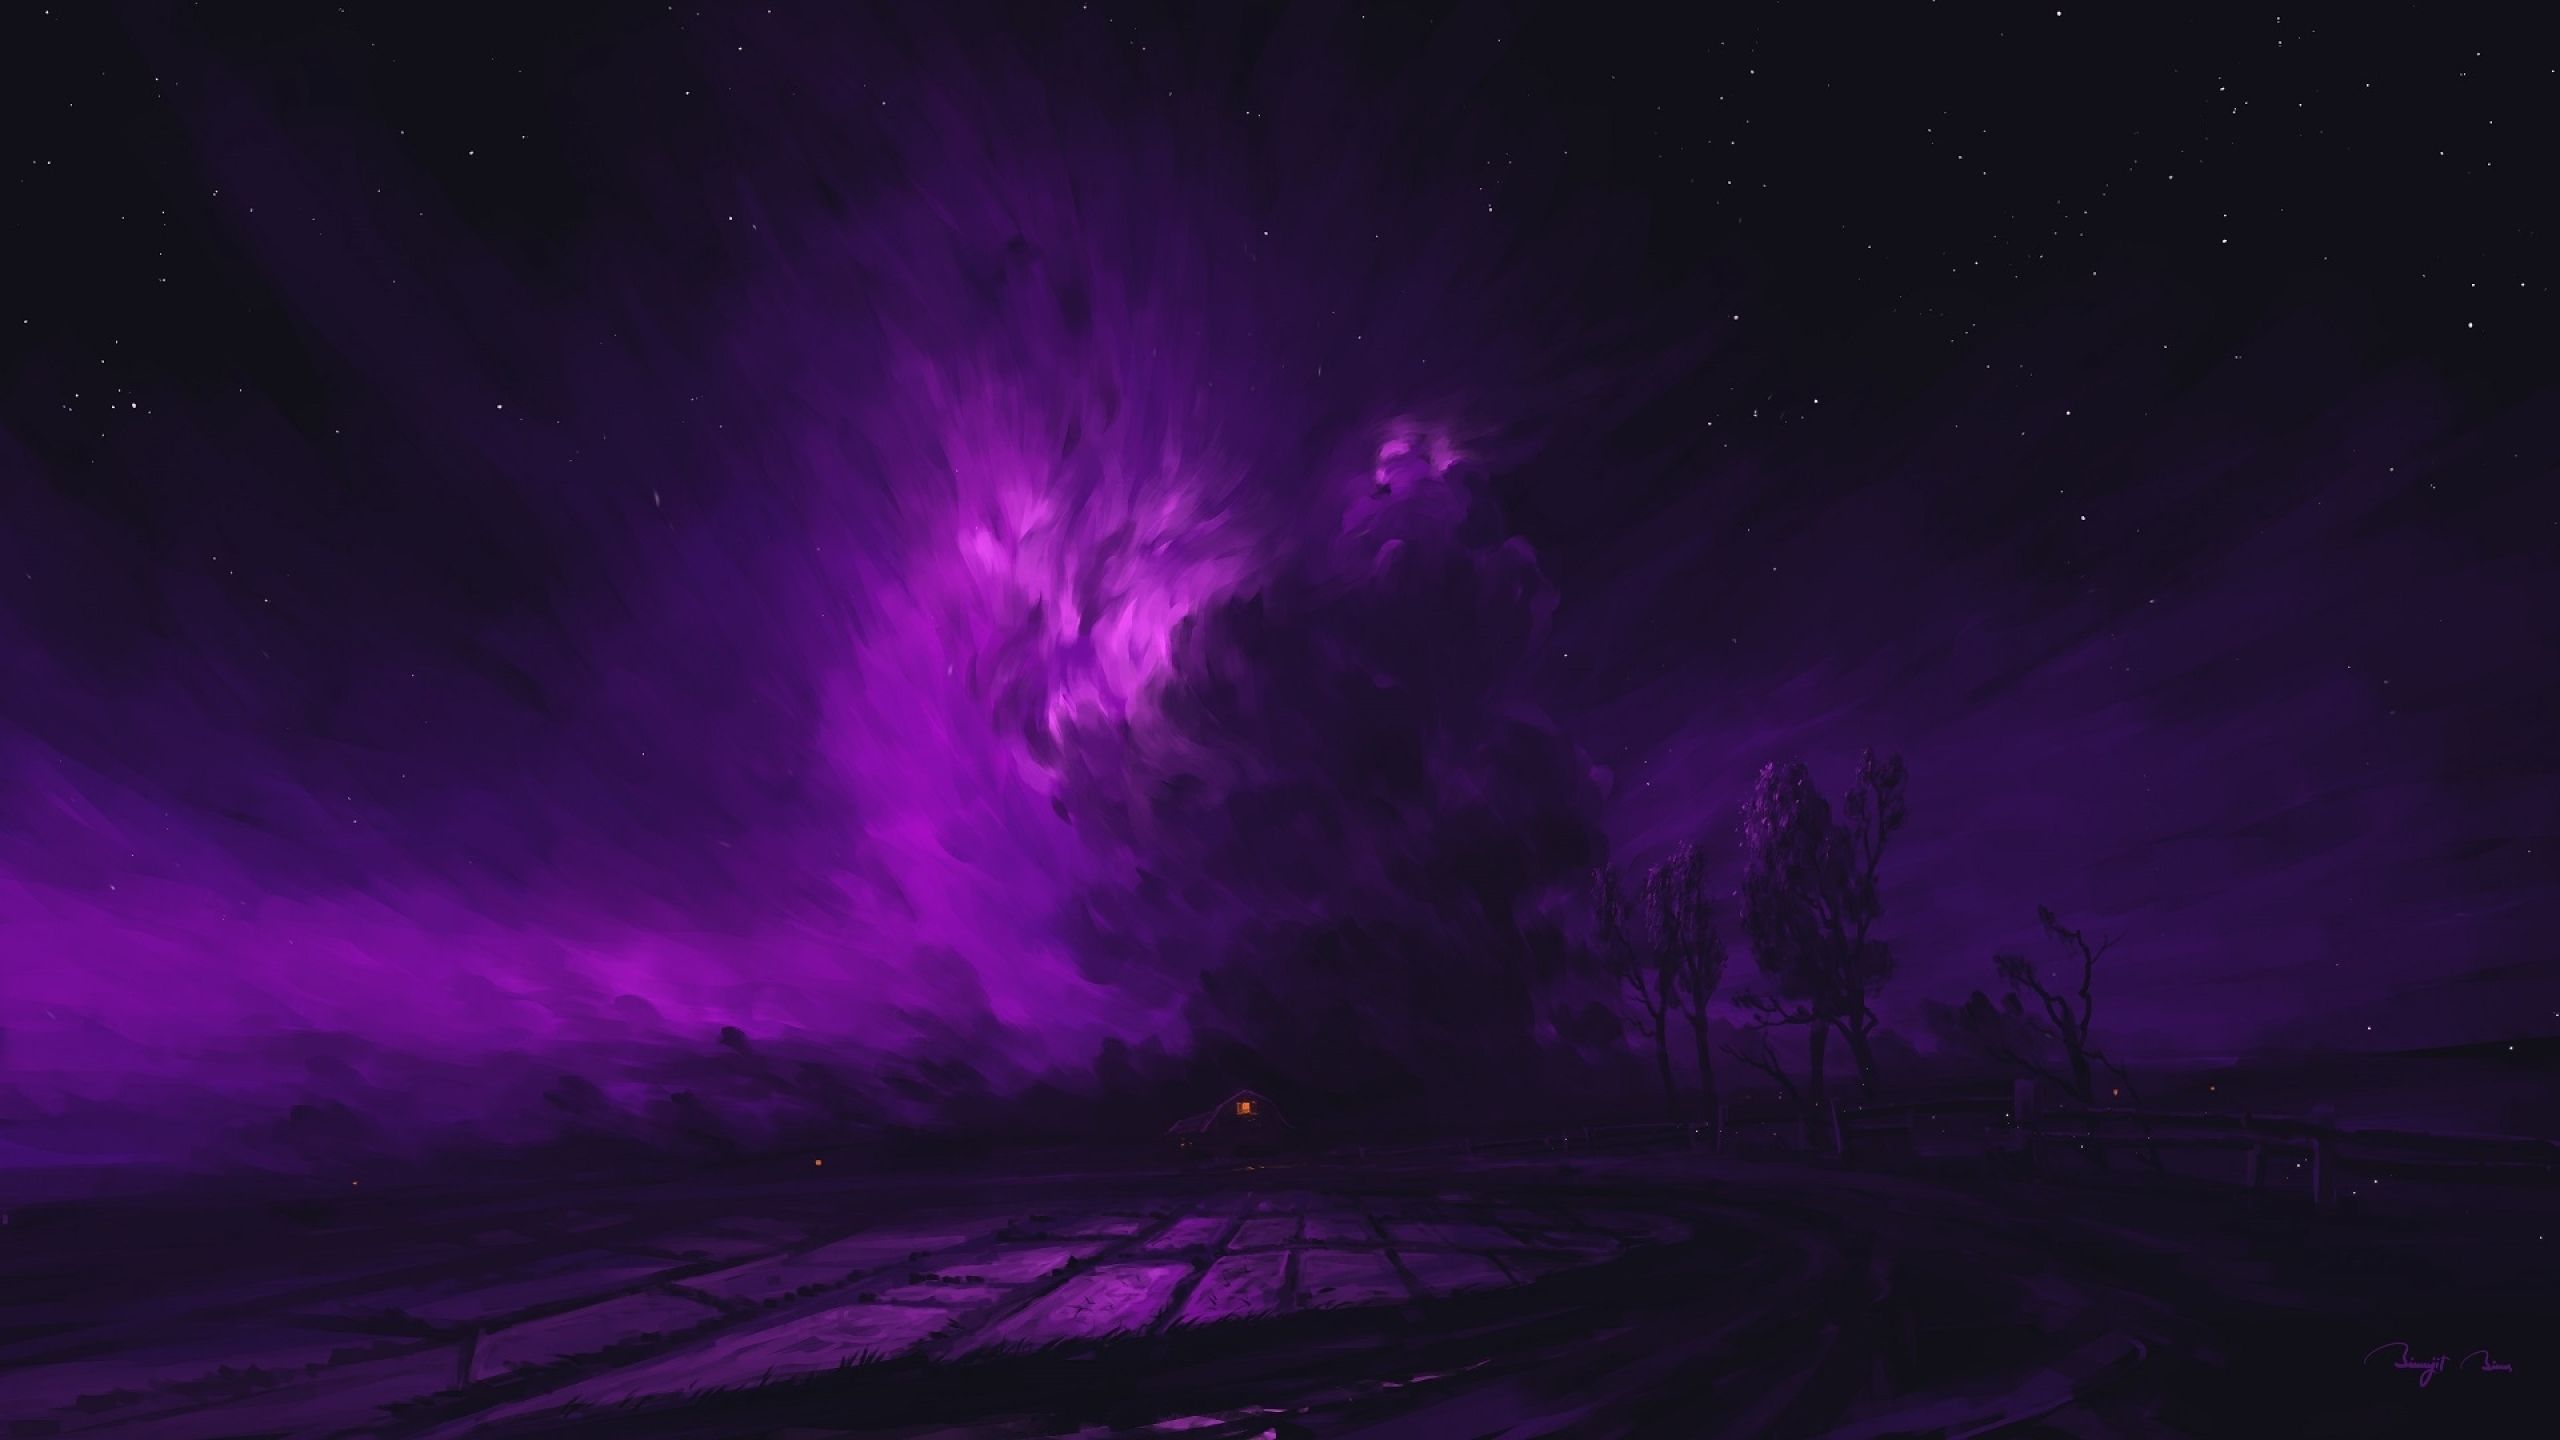  2560x1440 Hintergrundbild 2560x1440. Glowing Purple Cloud Art 1440P Resolution Wallpaper, HD Artist 4K Wallpaper, Image, Photo and Background